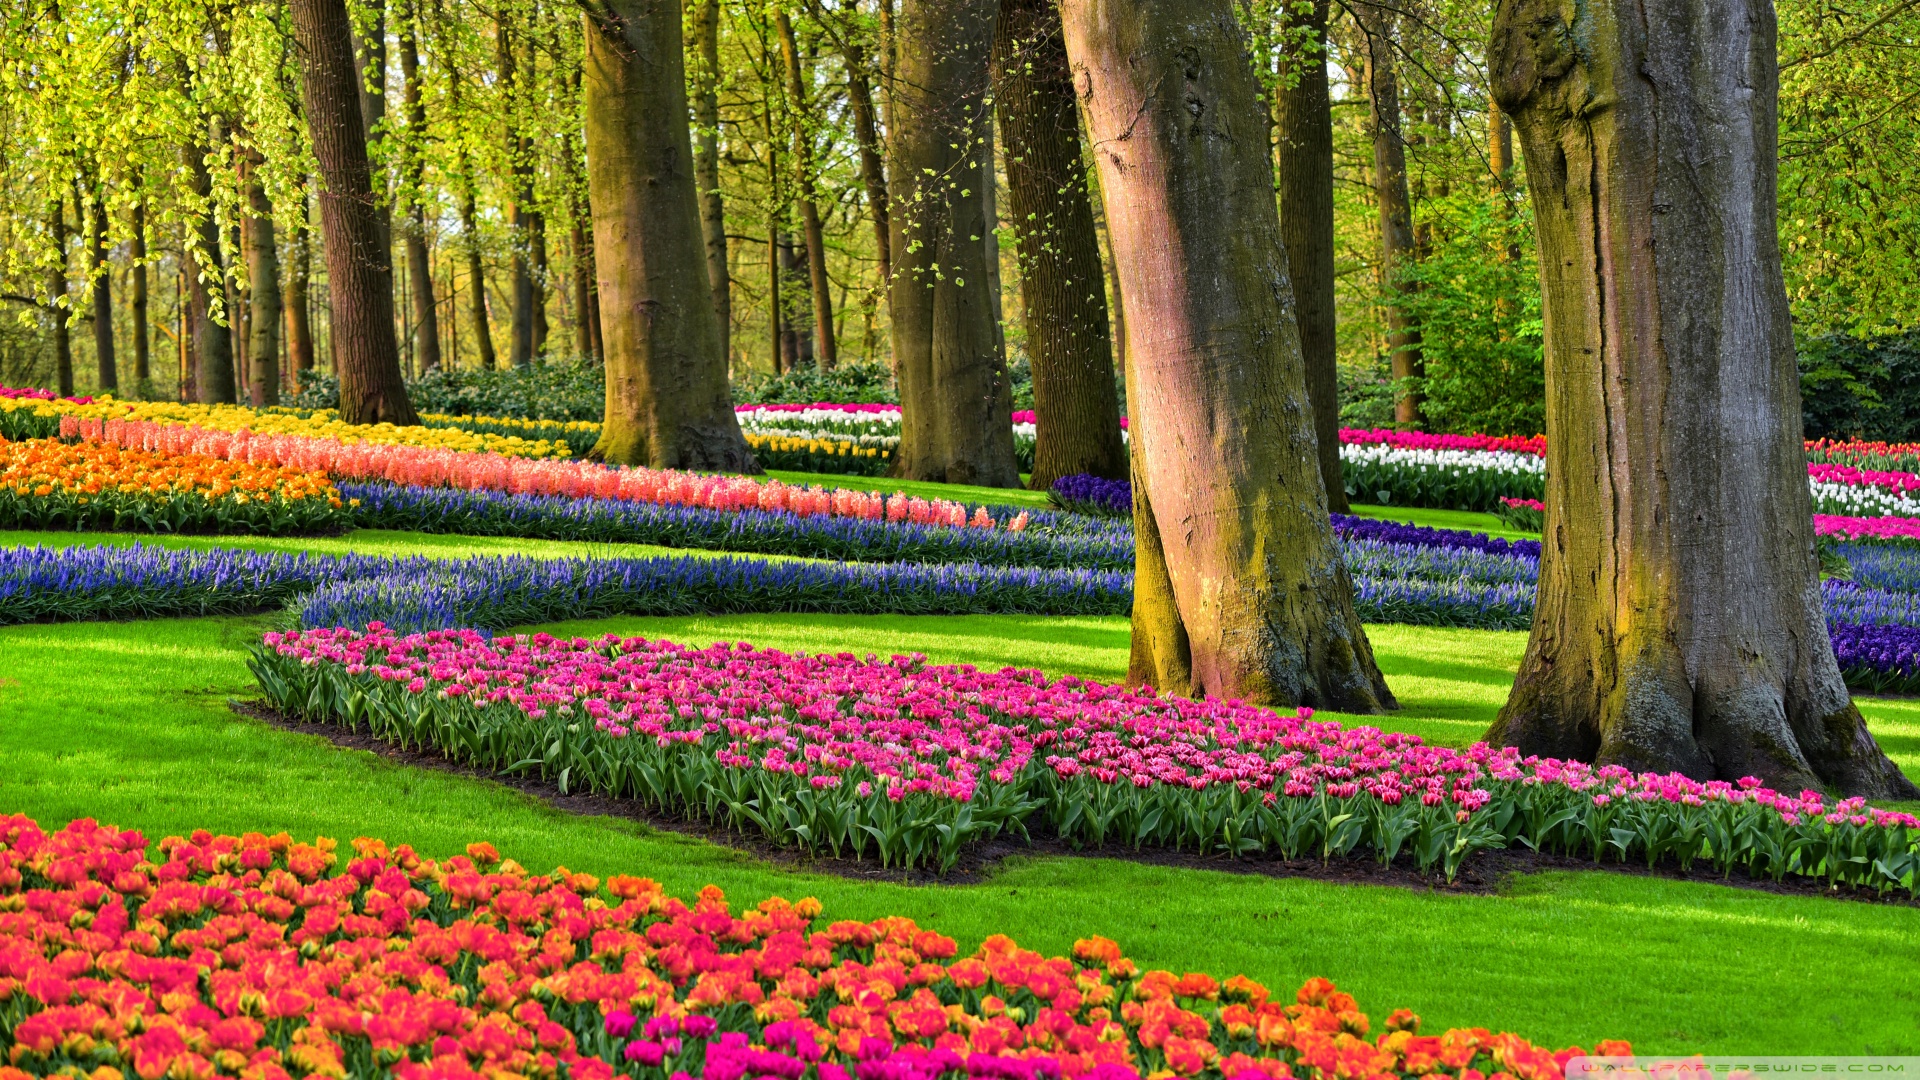 Colorful Spring Gardens, Holland, Netherlands Ultra HD Desktop Background Wallpaper for 4K UHD TV, Widescreen & UltraWide Desktop & Laptop, Tablet